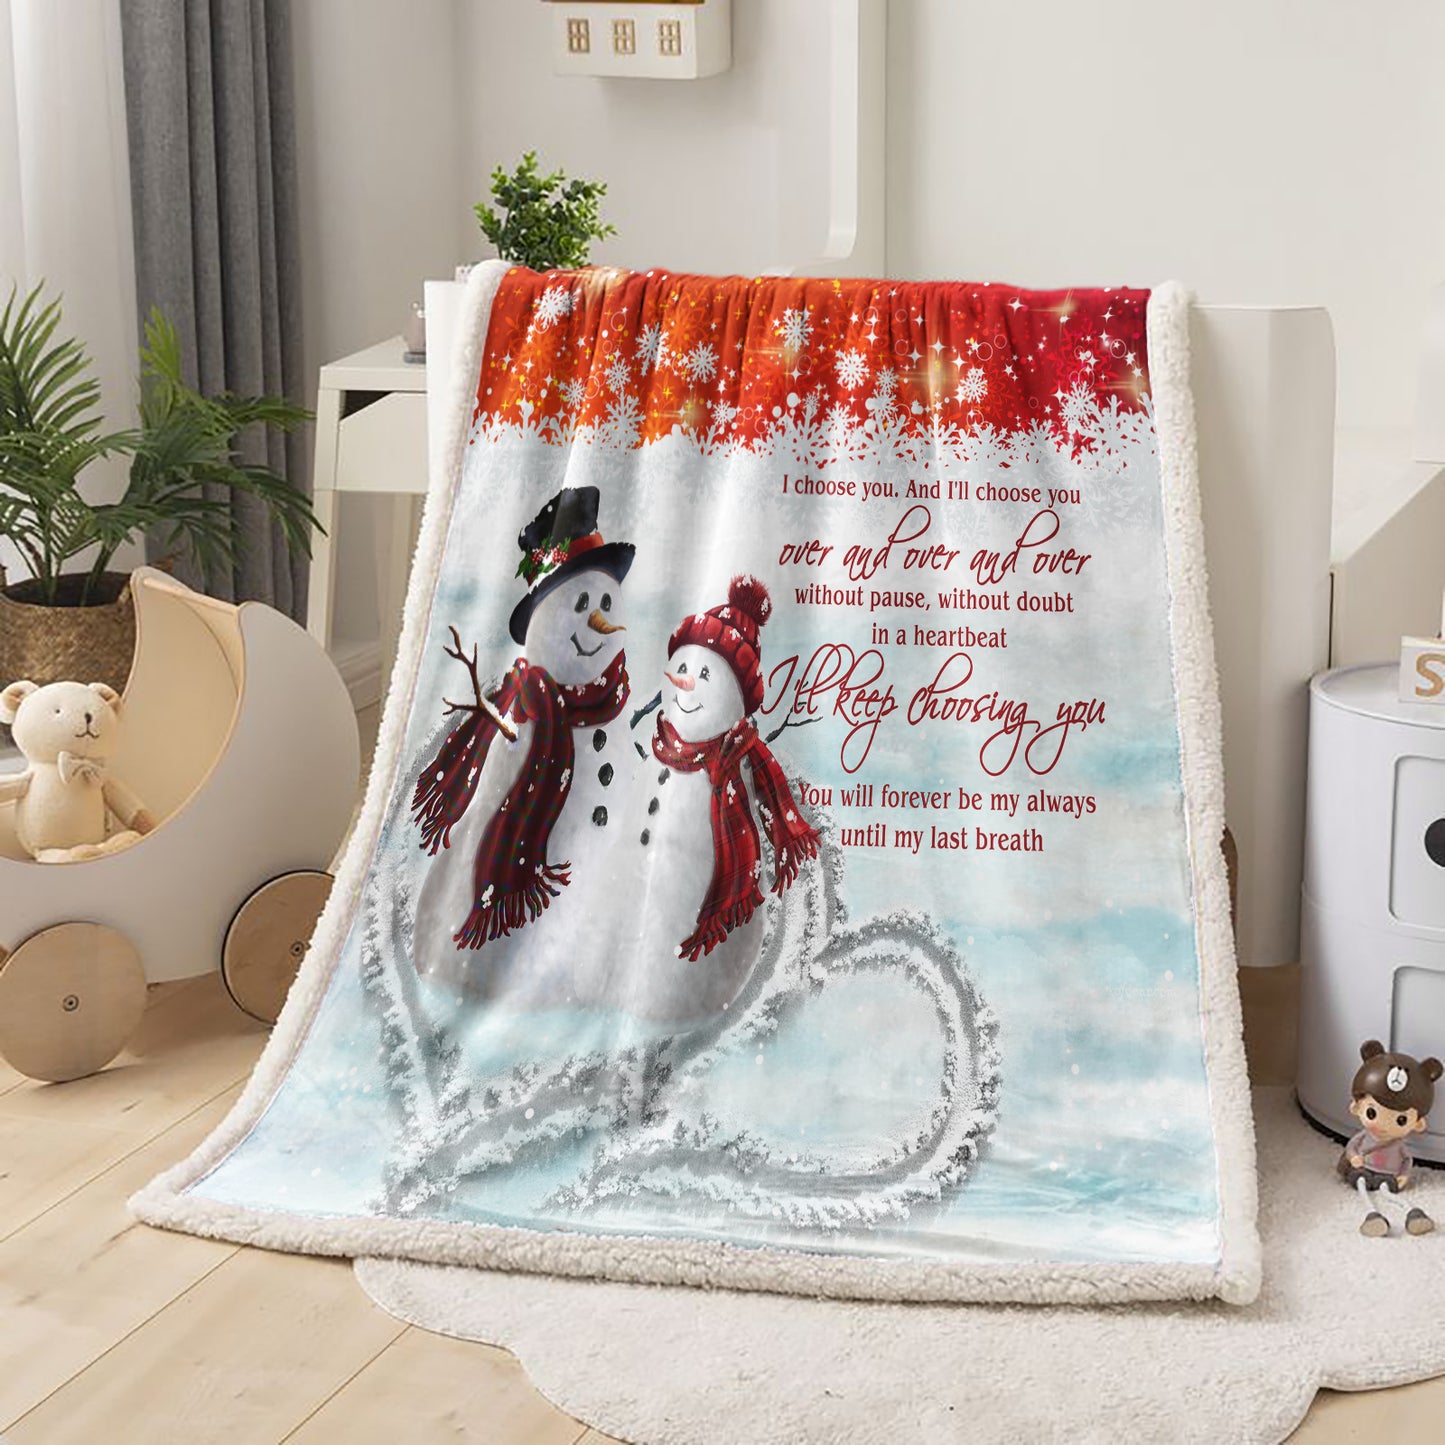 WONGS BEDDING Christmas Snowman Blanket